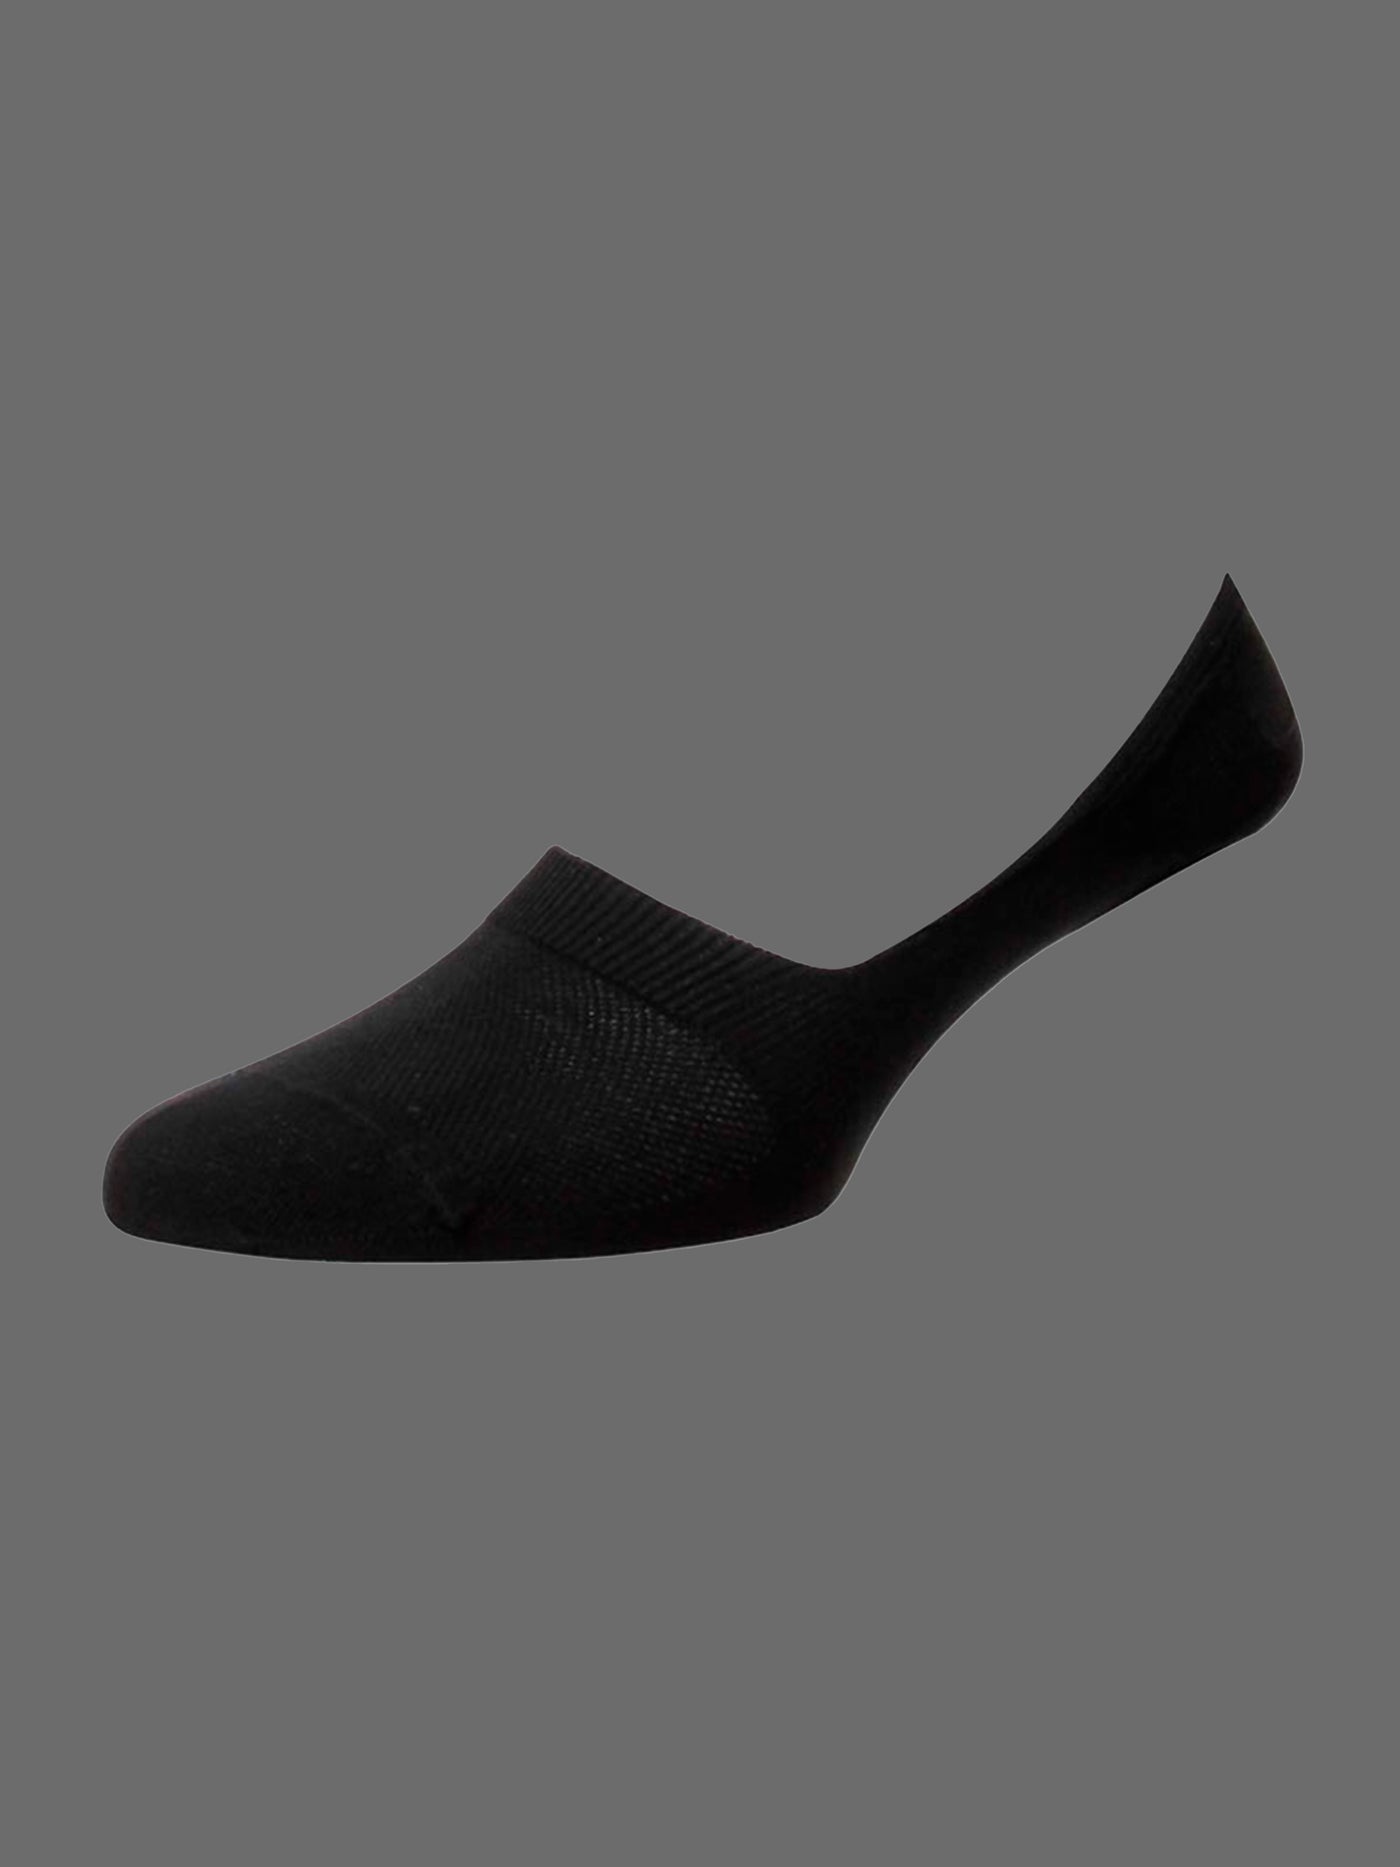 Pantherella Seville Invisible Socks - Black